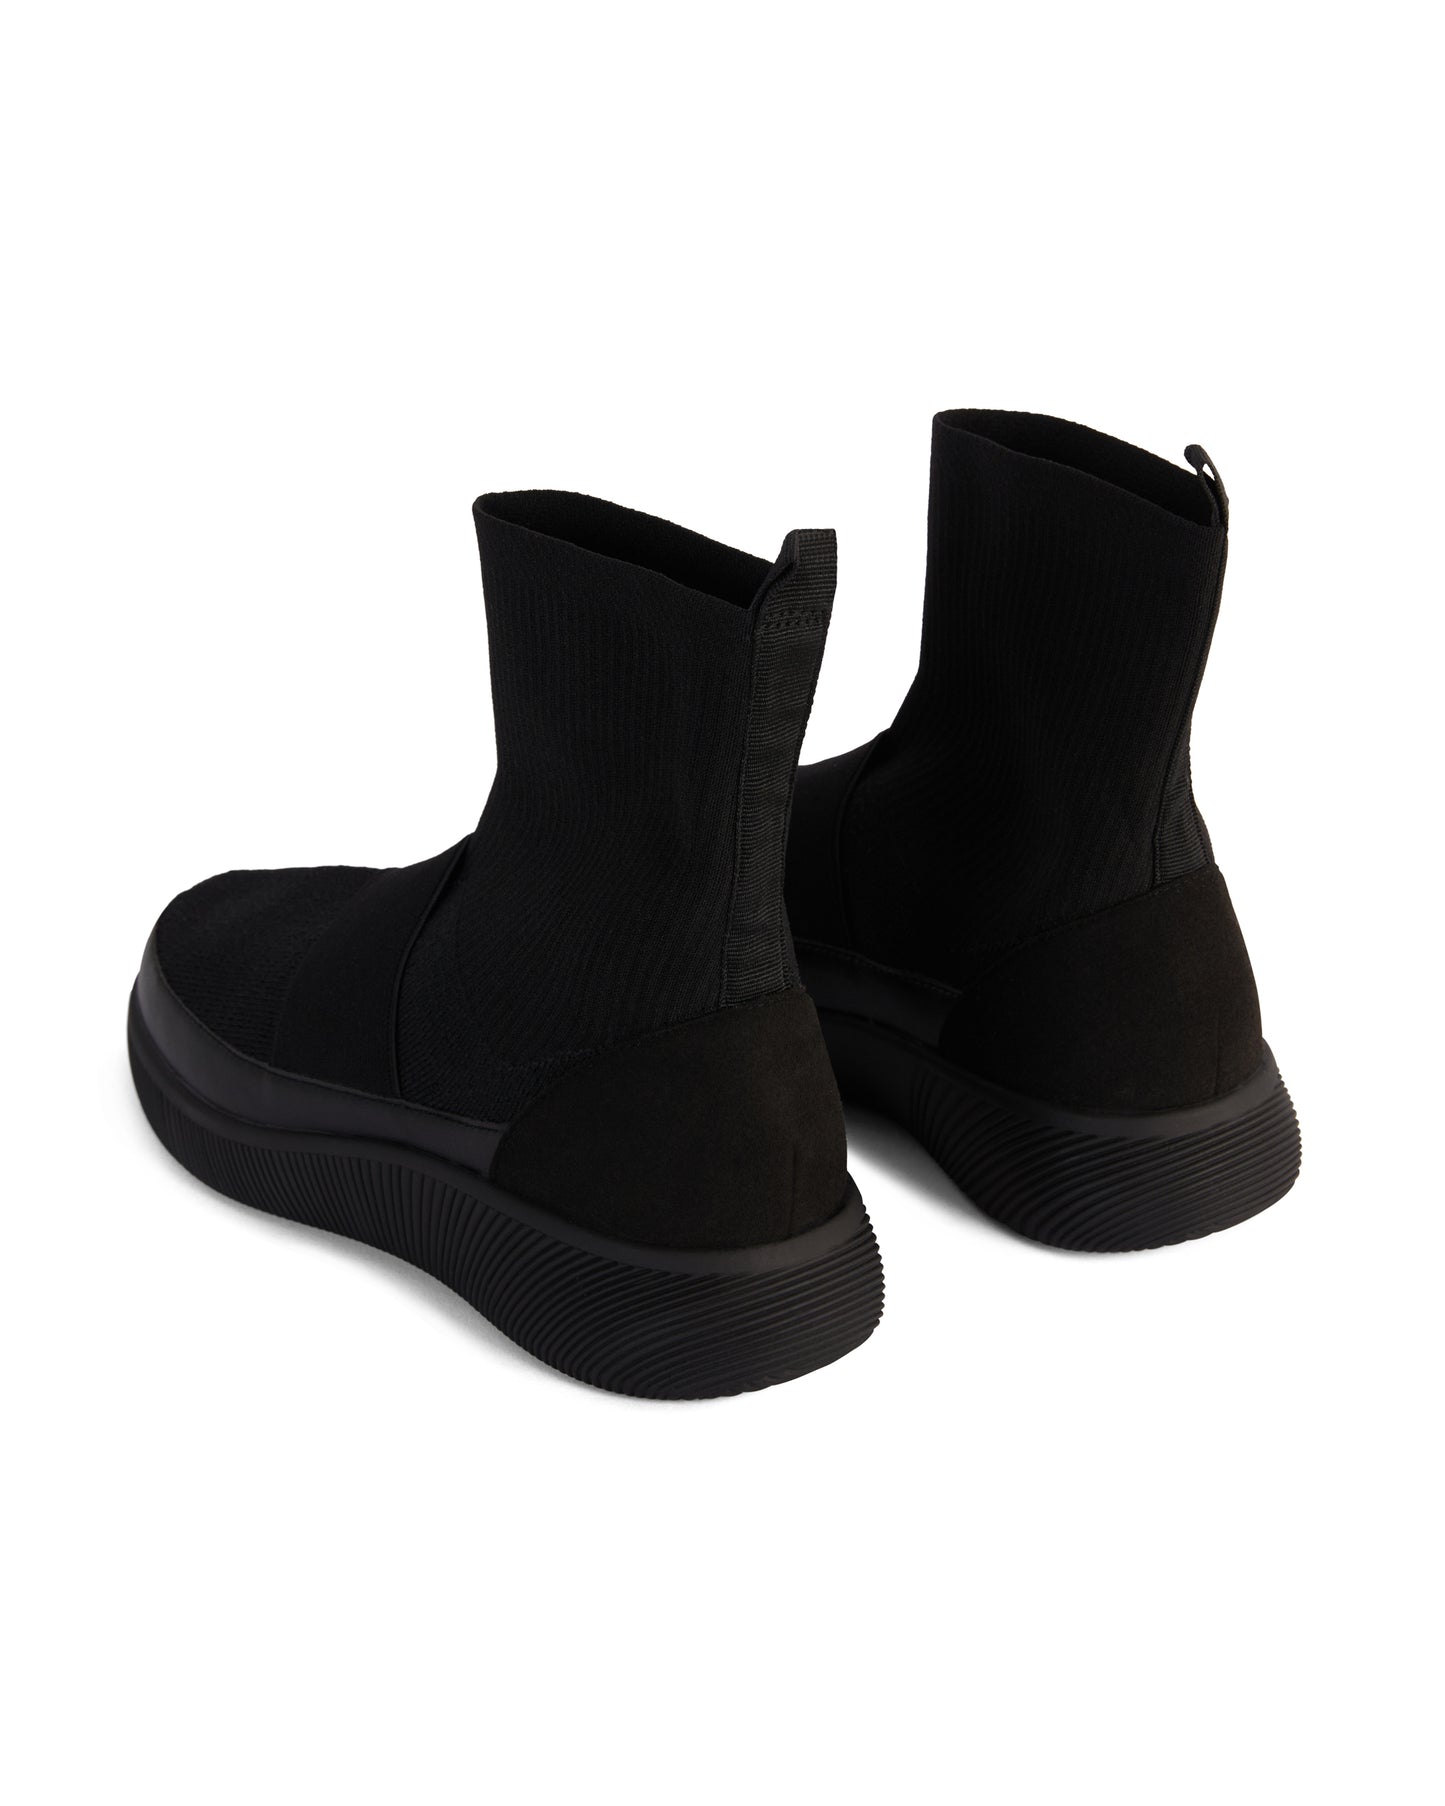 variant:: noir -- sollar shoe noir